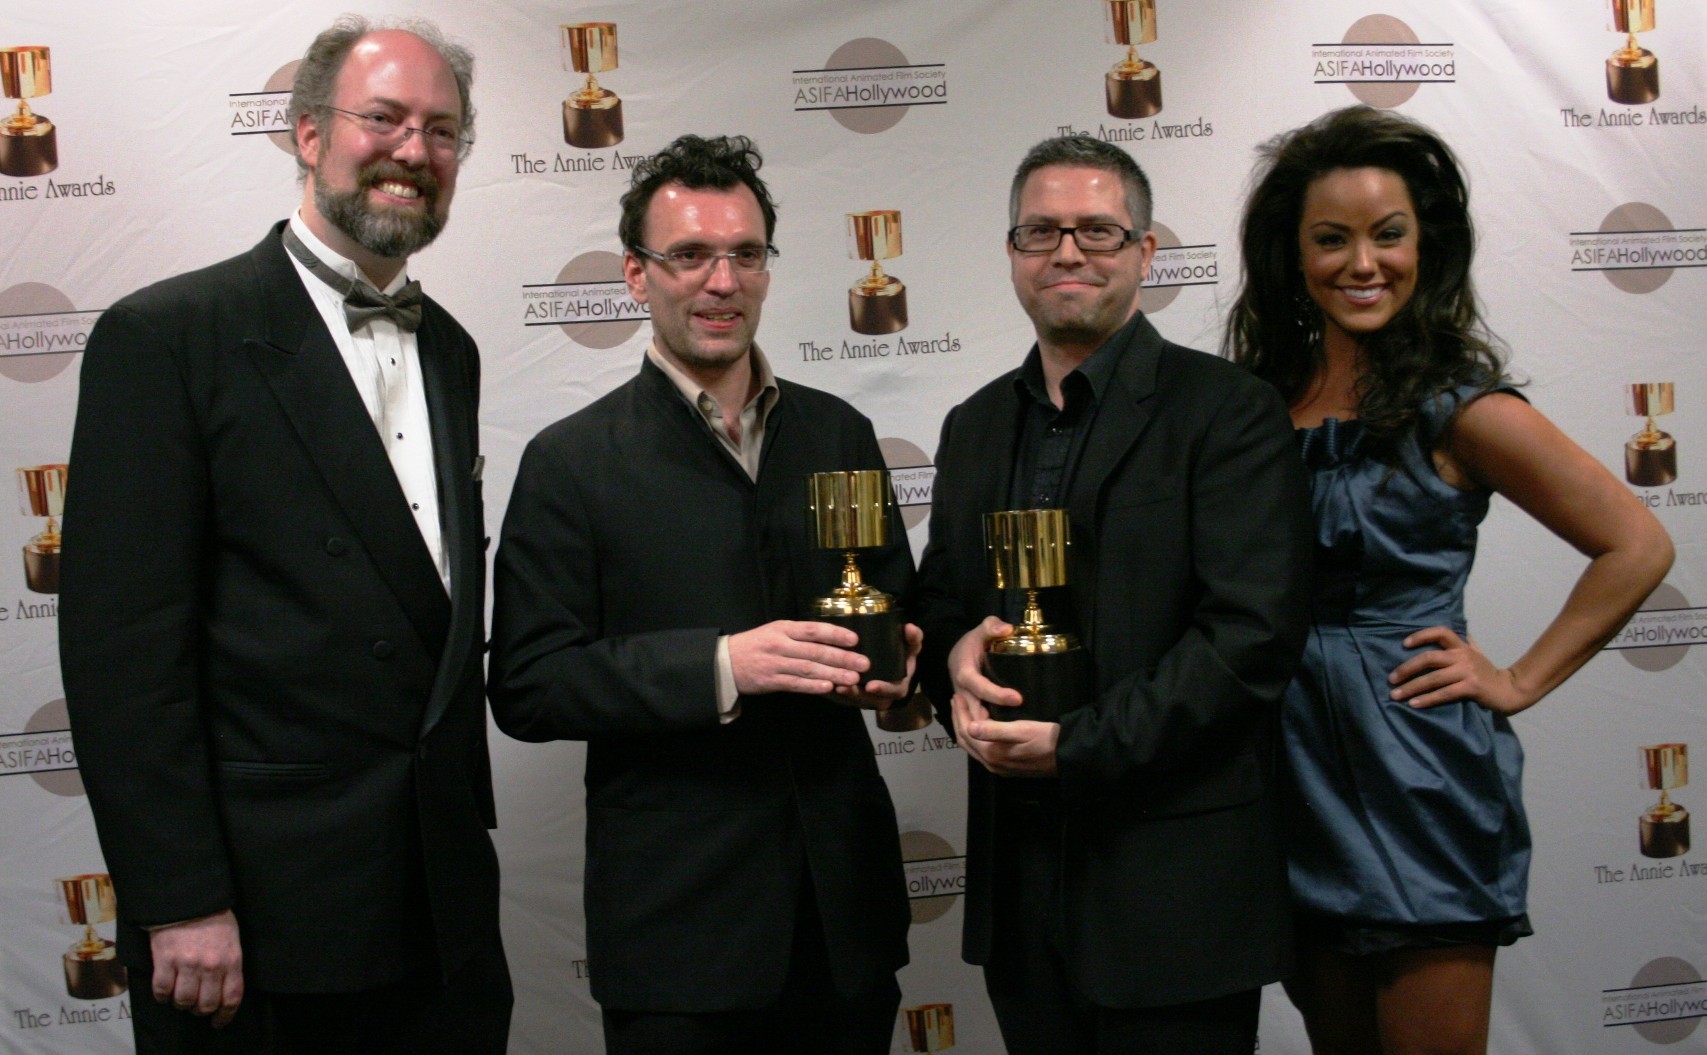 John Powell, Mark Walton, Katy Mixon and Henry Jackman at event of Kung Fu Panda: Secrets of the Furious Five (2008)